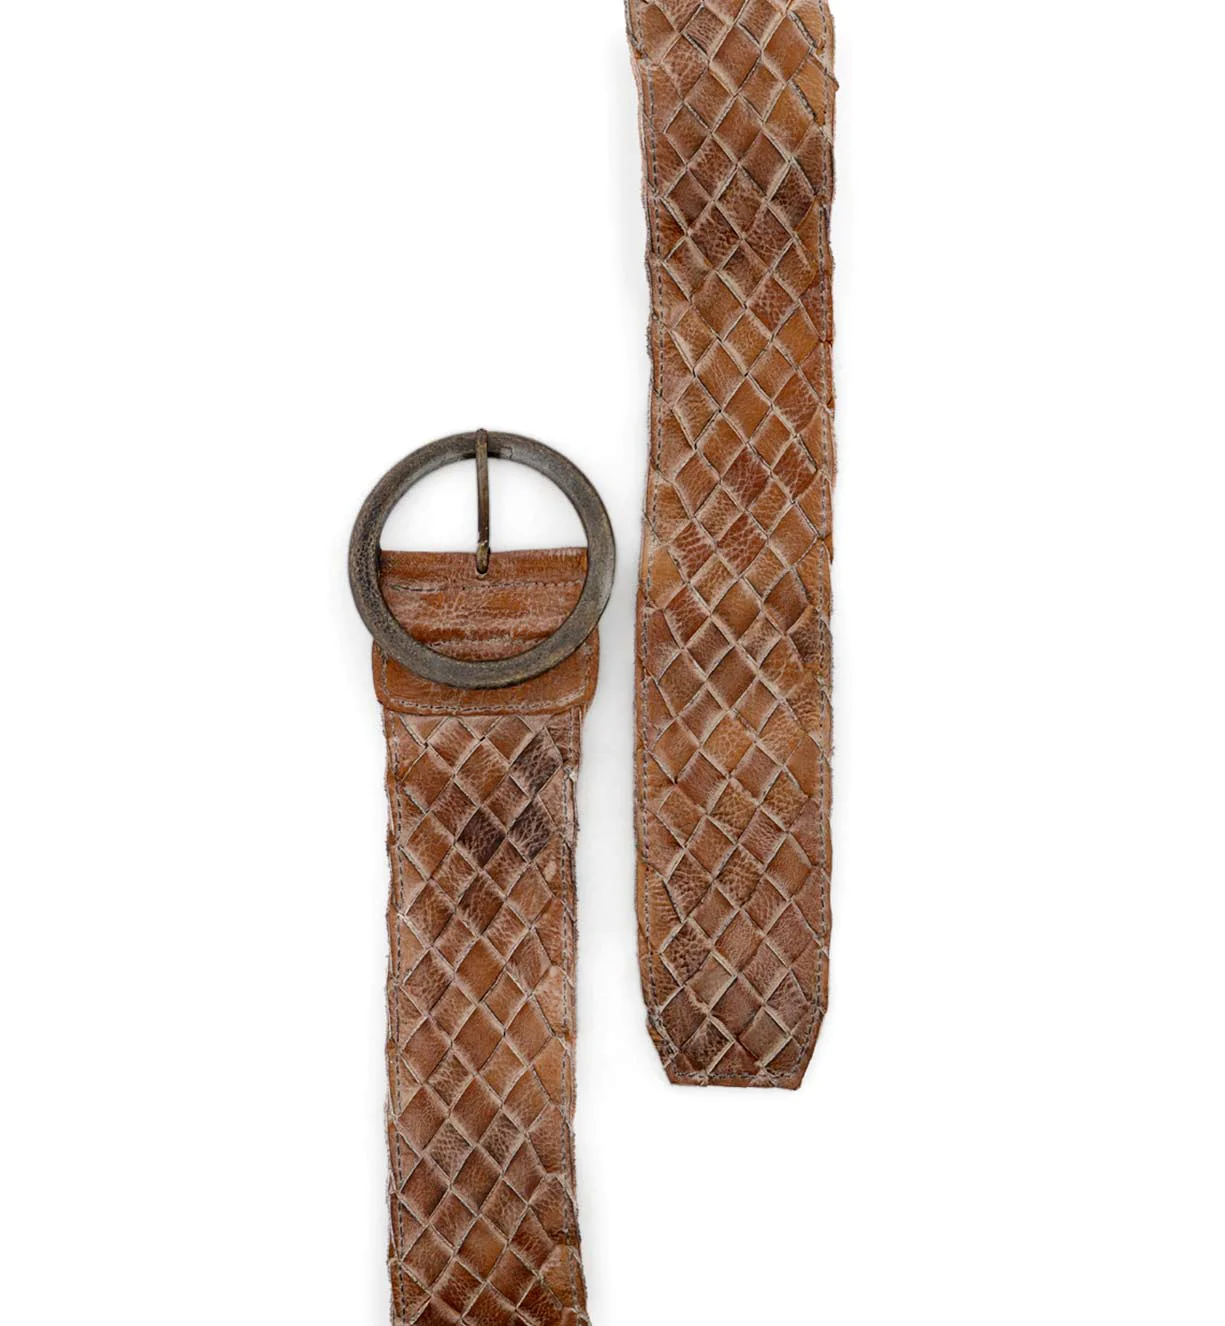 Load image into Gallery viewer, The Dreamweaver Belt in Teak Rustic - SpiritedBoutiques Boho Hippie Boutique Style Belt, Bed Stu
